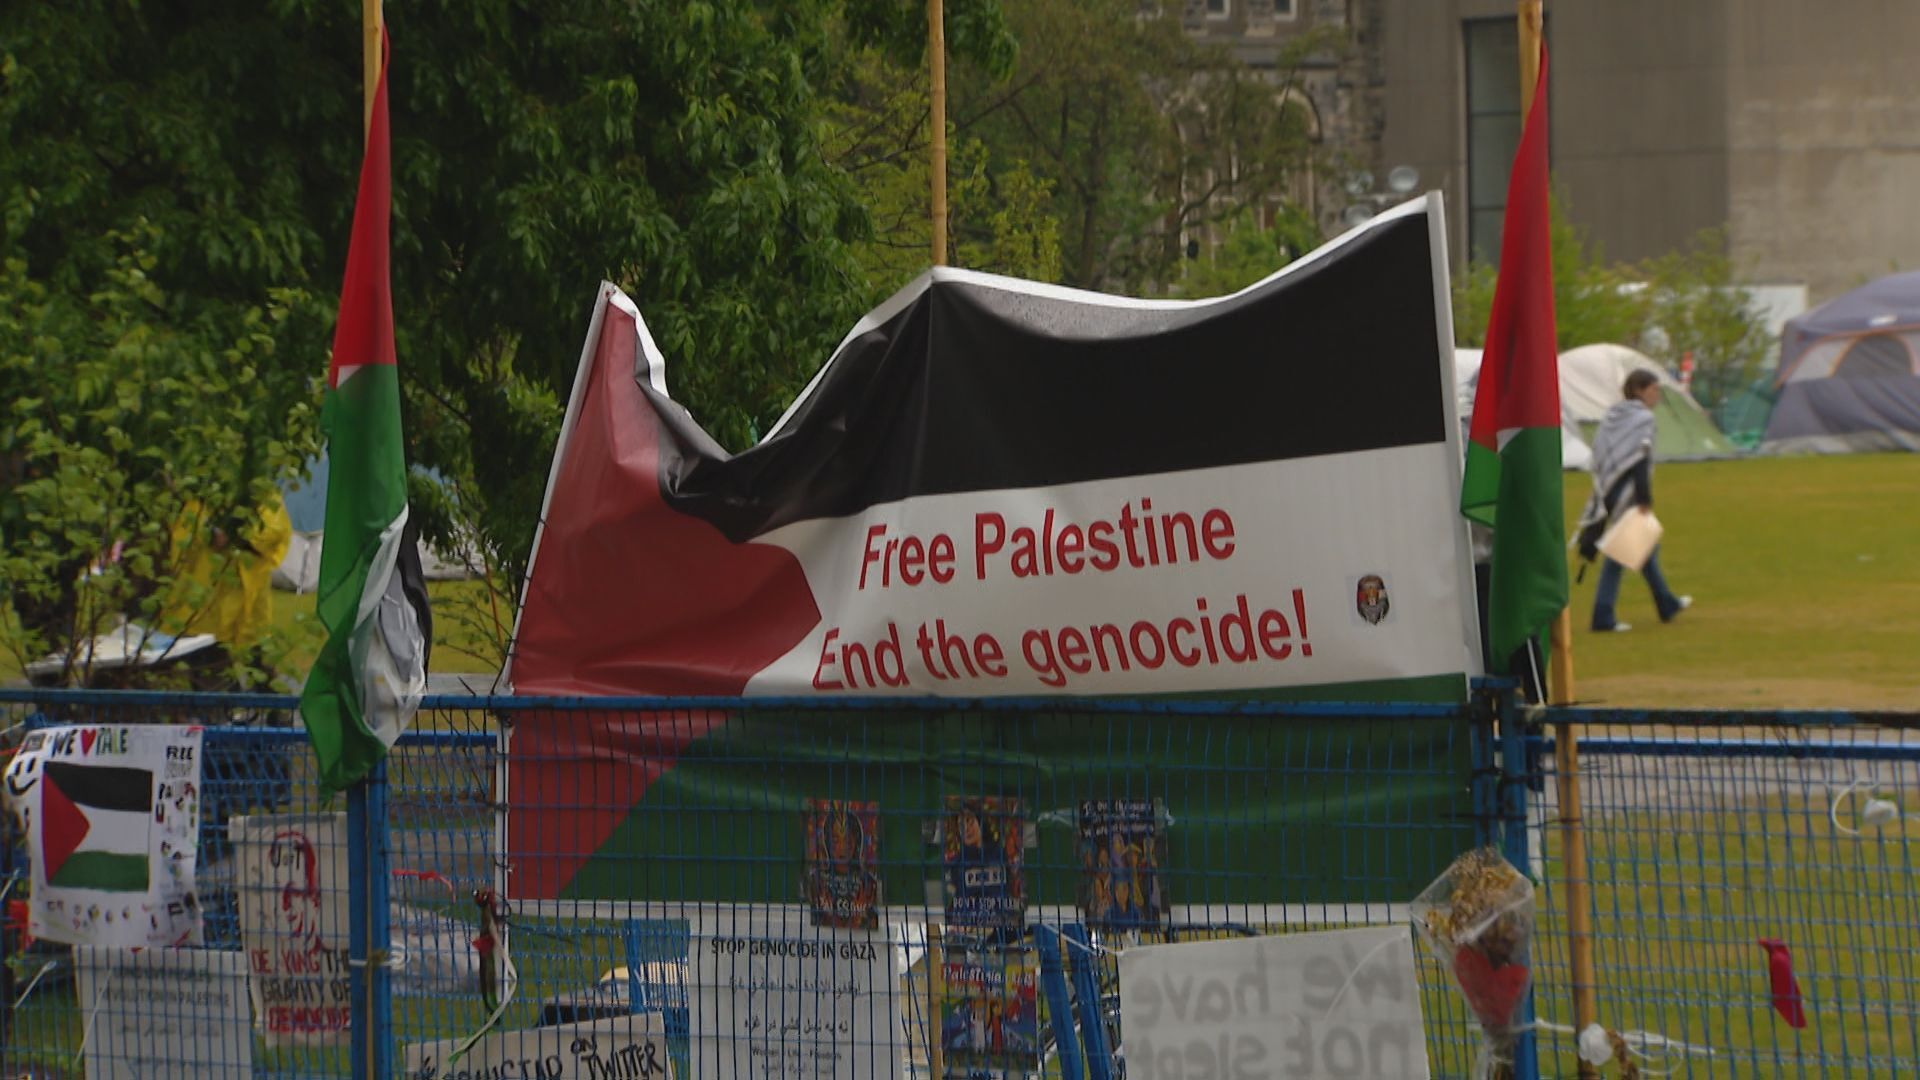 U of T seeks court injunction to shut down pro-Palestinian encampment